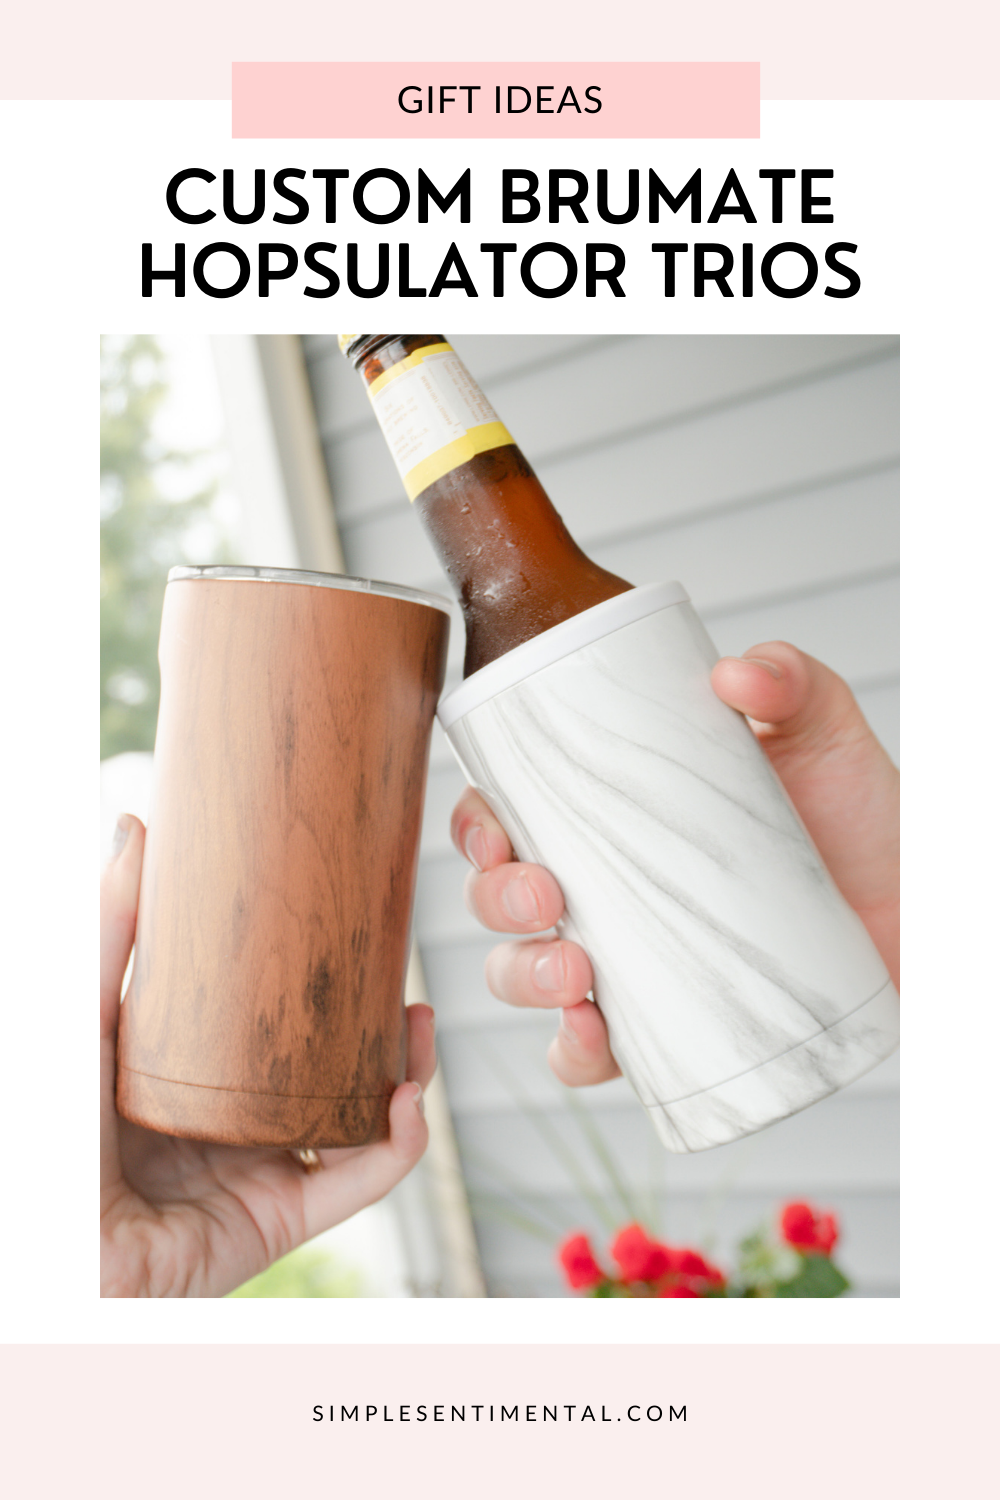 Custom Engraved Hopsulator Trio 3 in 1 Can Cooler by BruMate